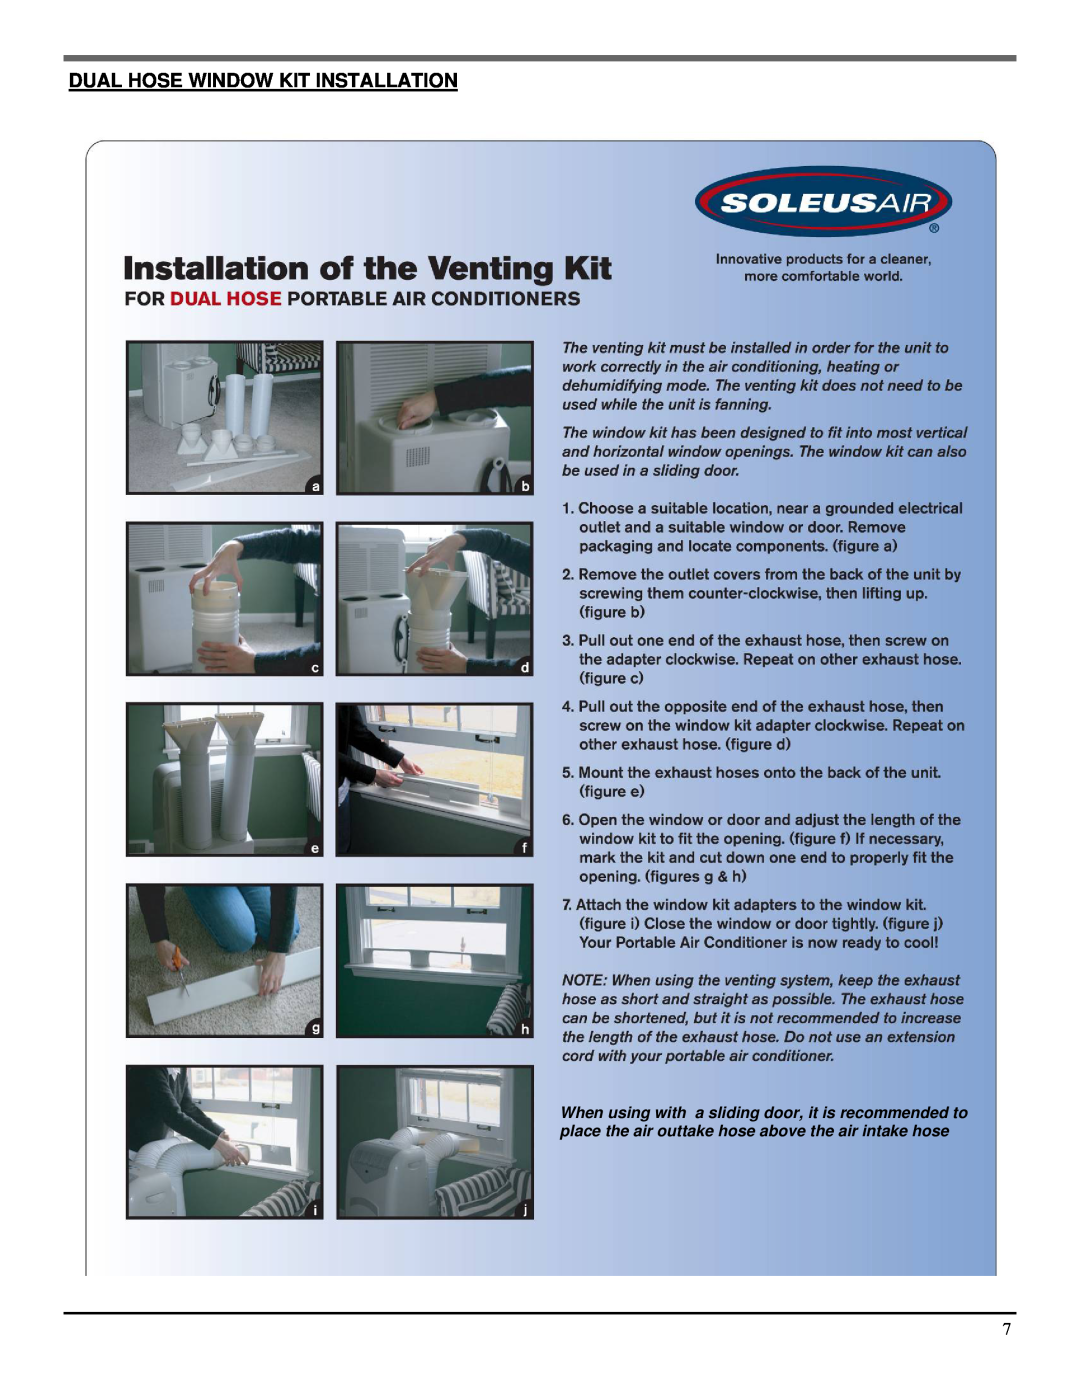 Soleus Air PE3-12R-03 manual Dual Hose Window Kit Installation 